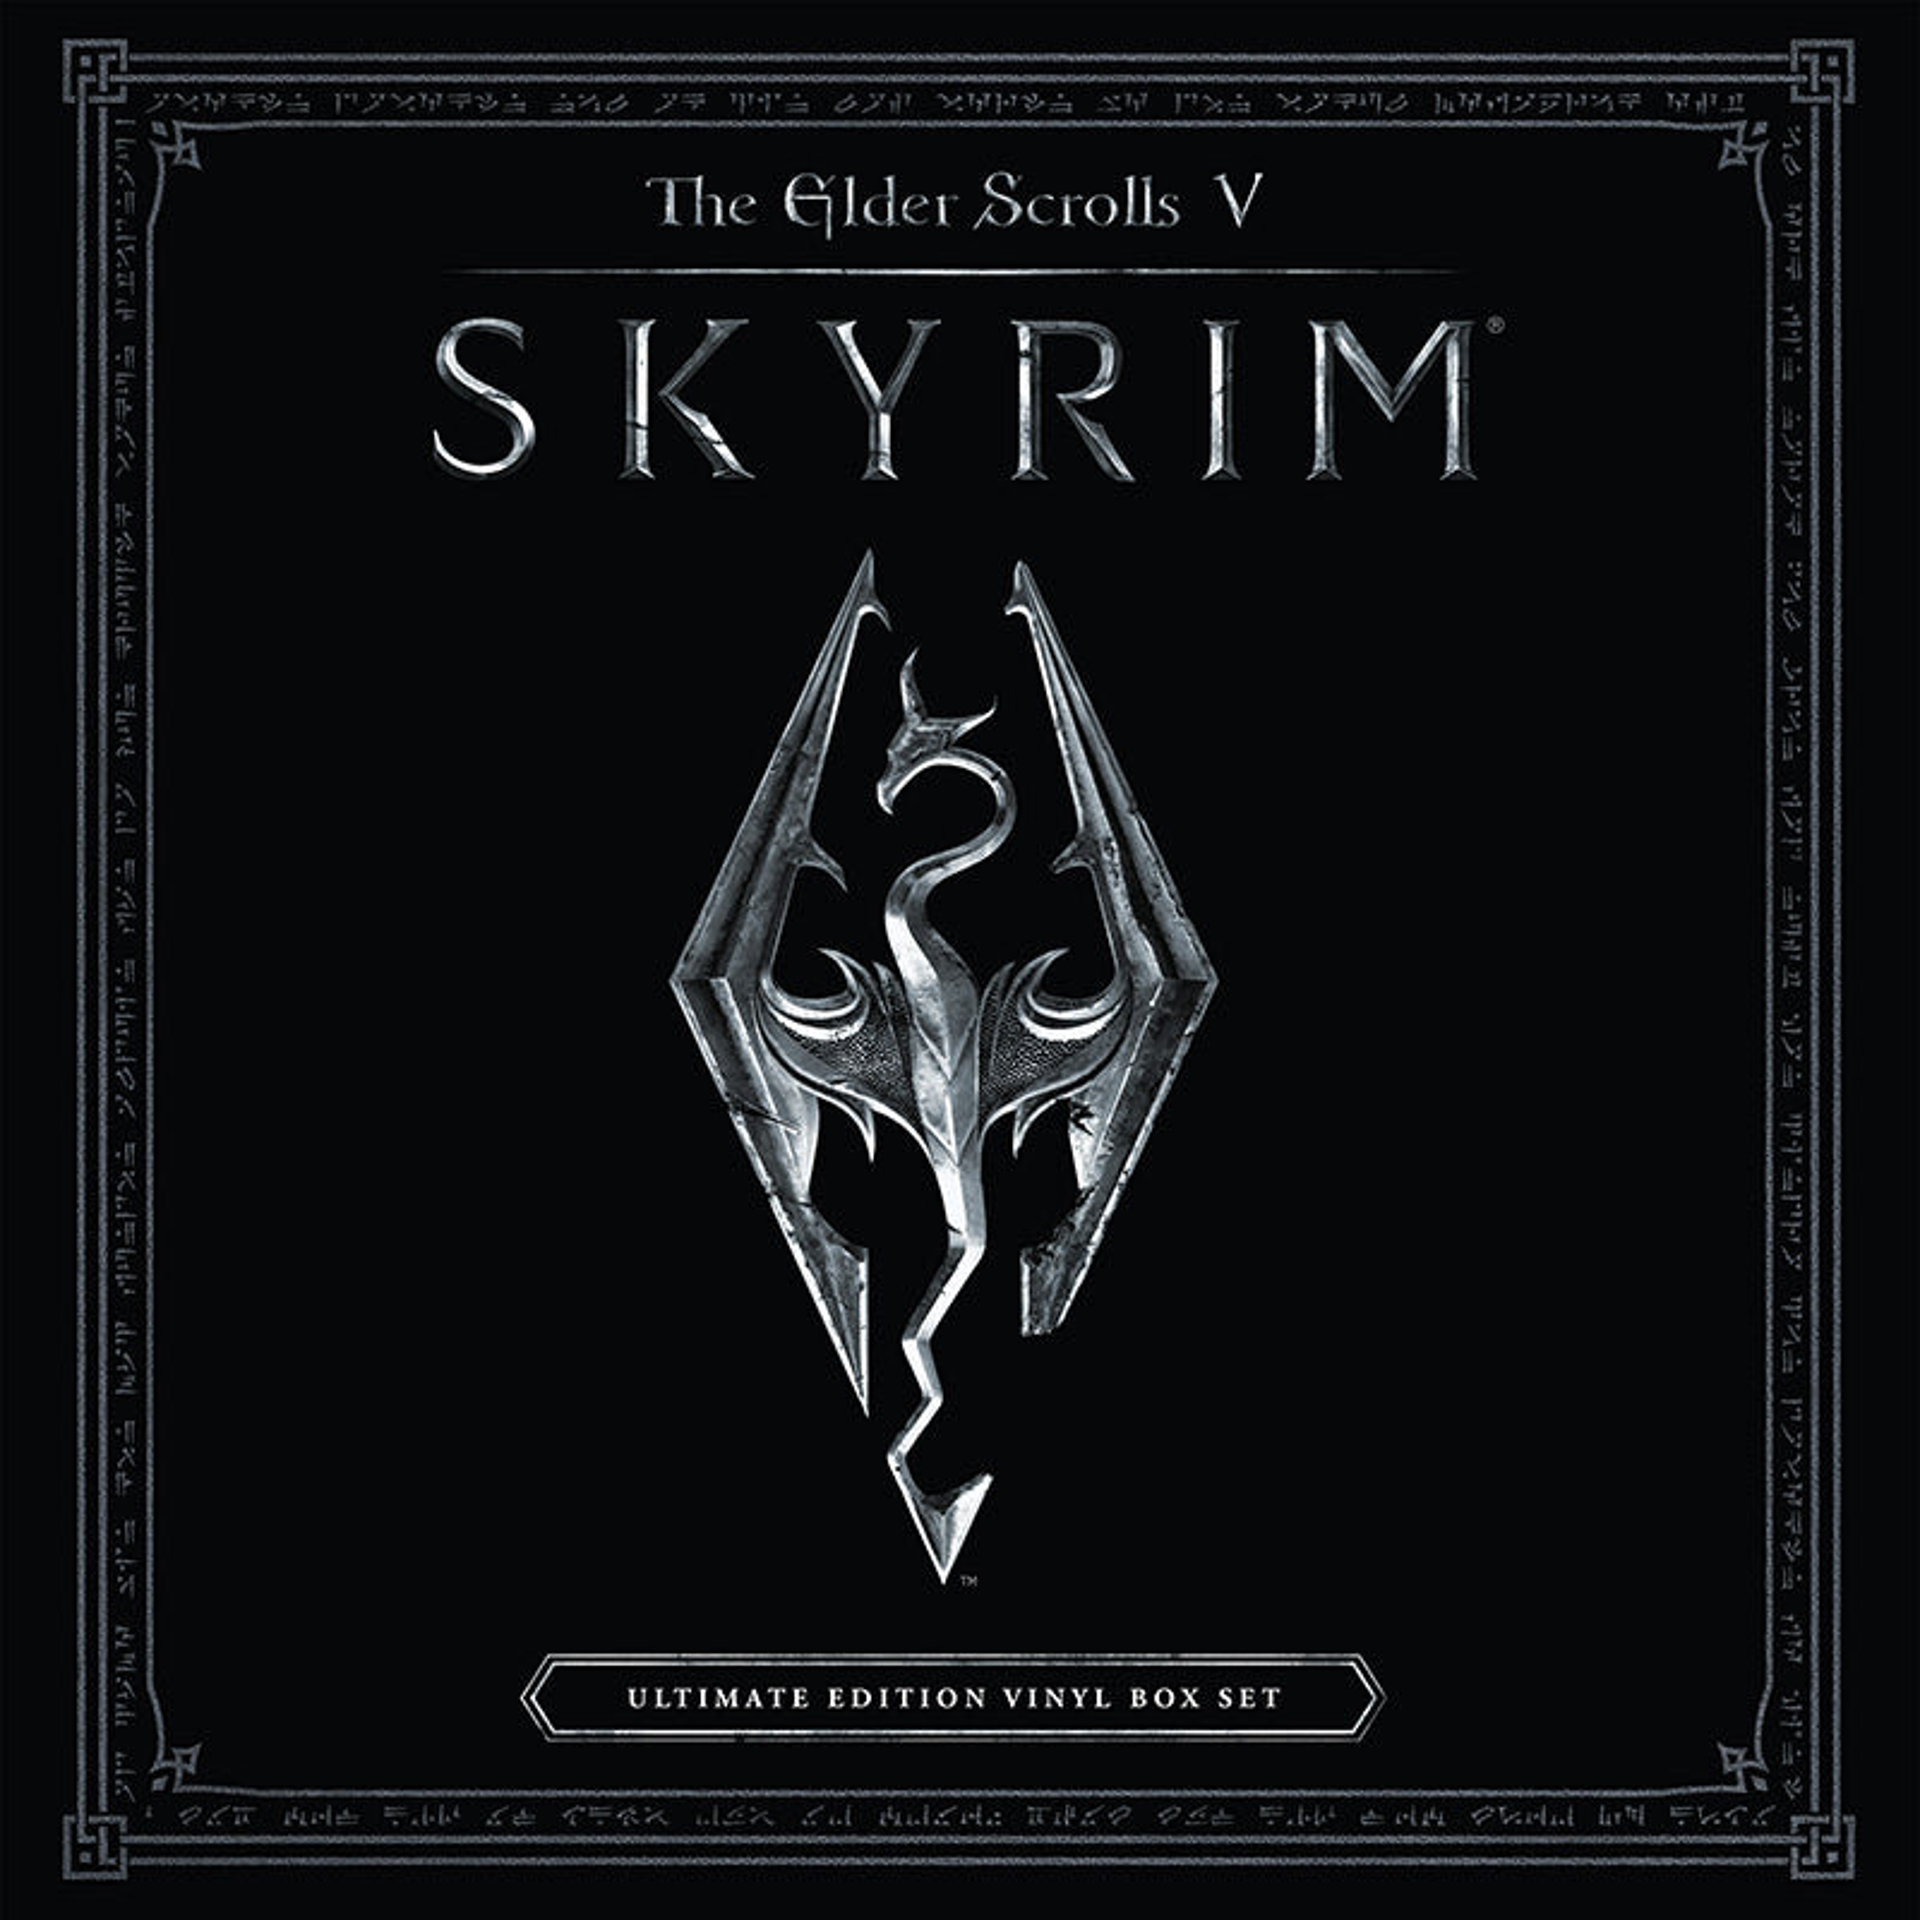 The Elder Scrolls V: Skyrim Ultimate Box Set Edition - Original Soundtrack - 4-LP Silver Exclue Fnac Vinyl